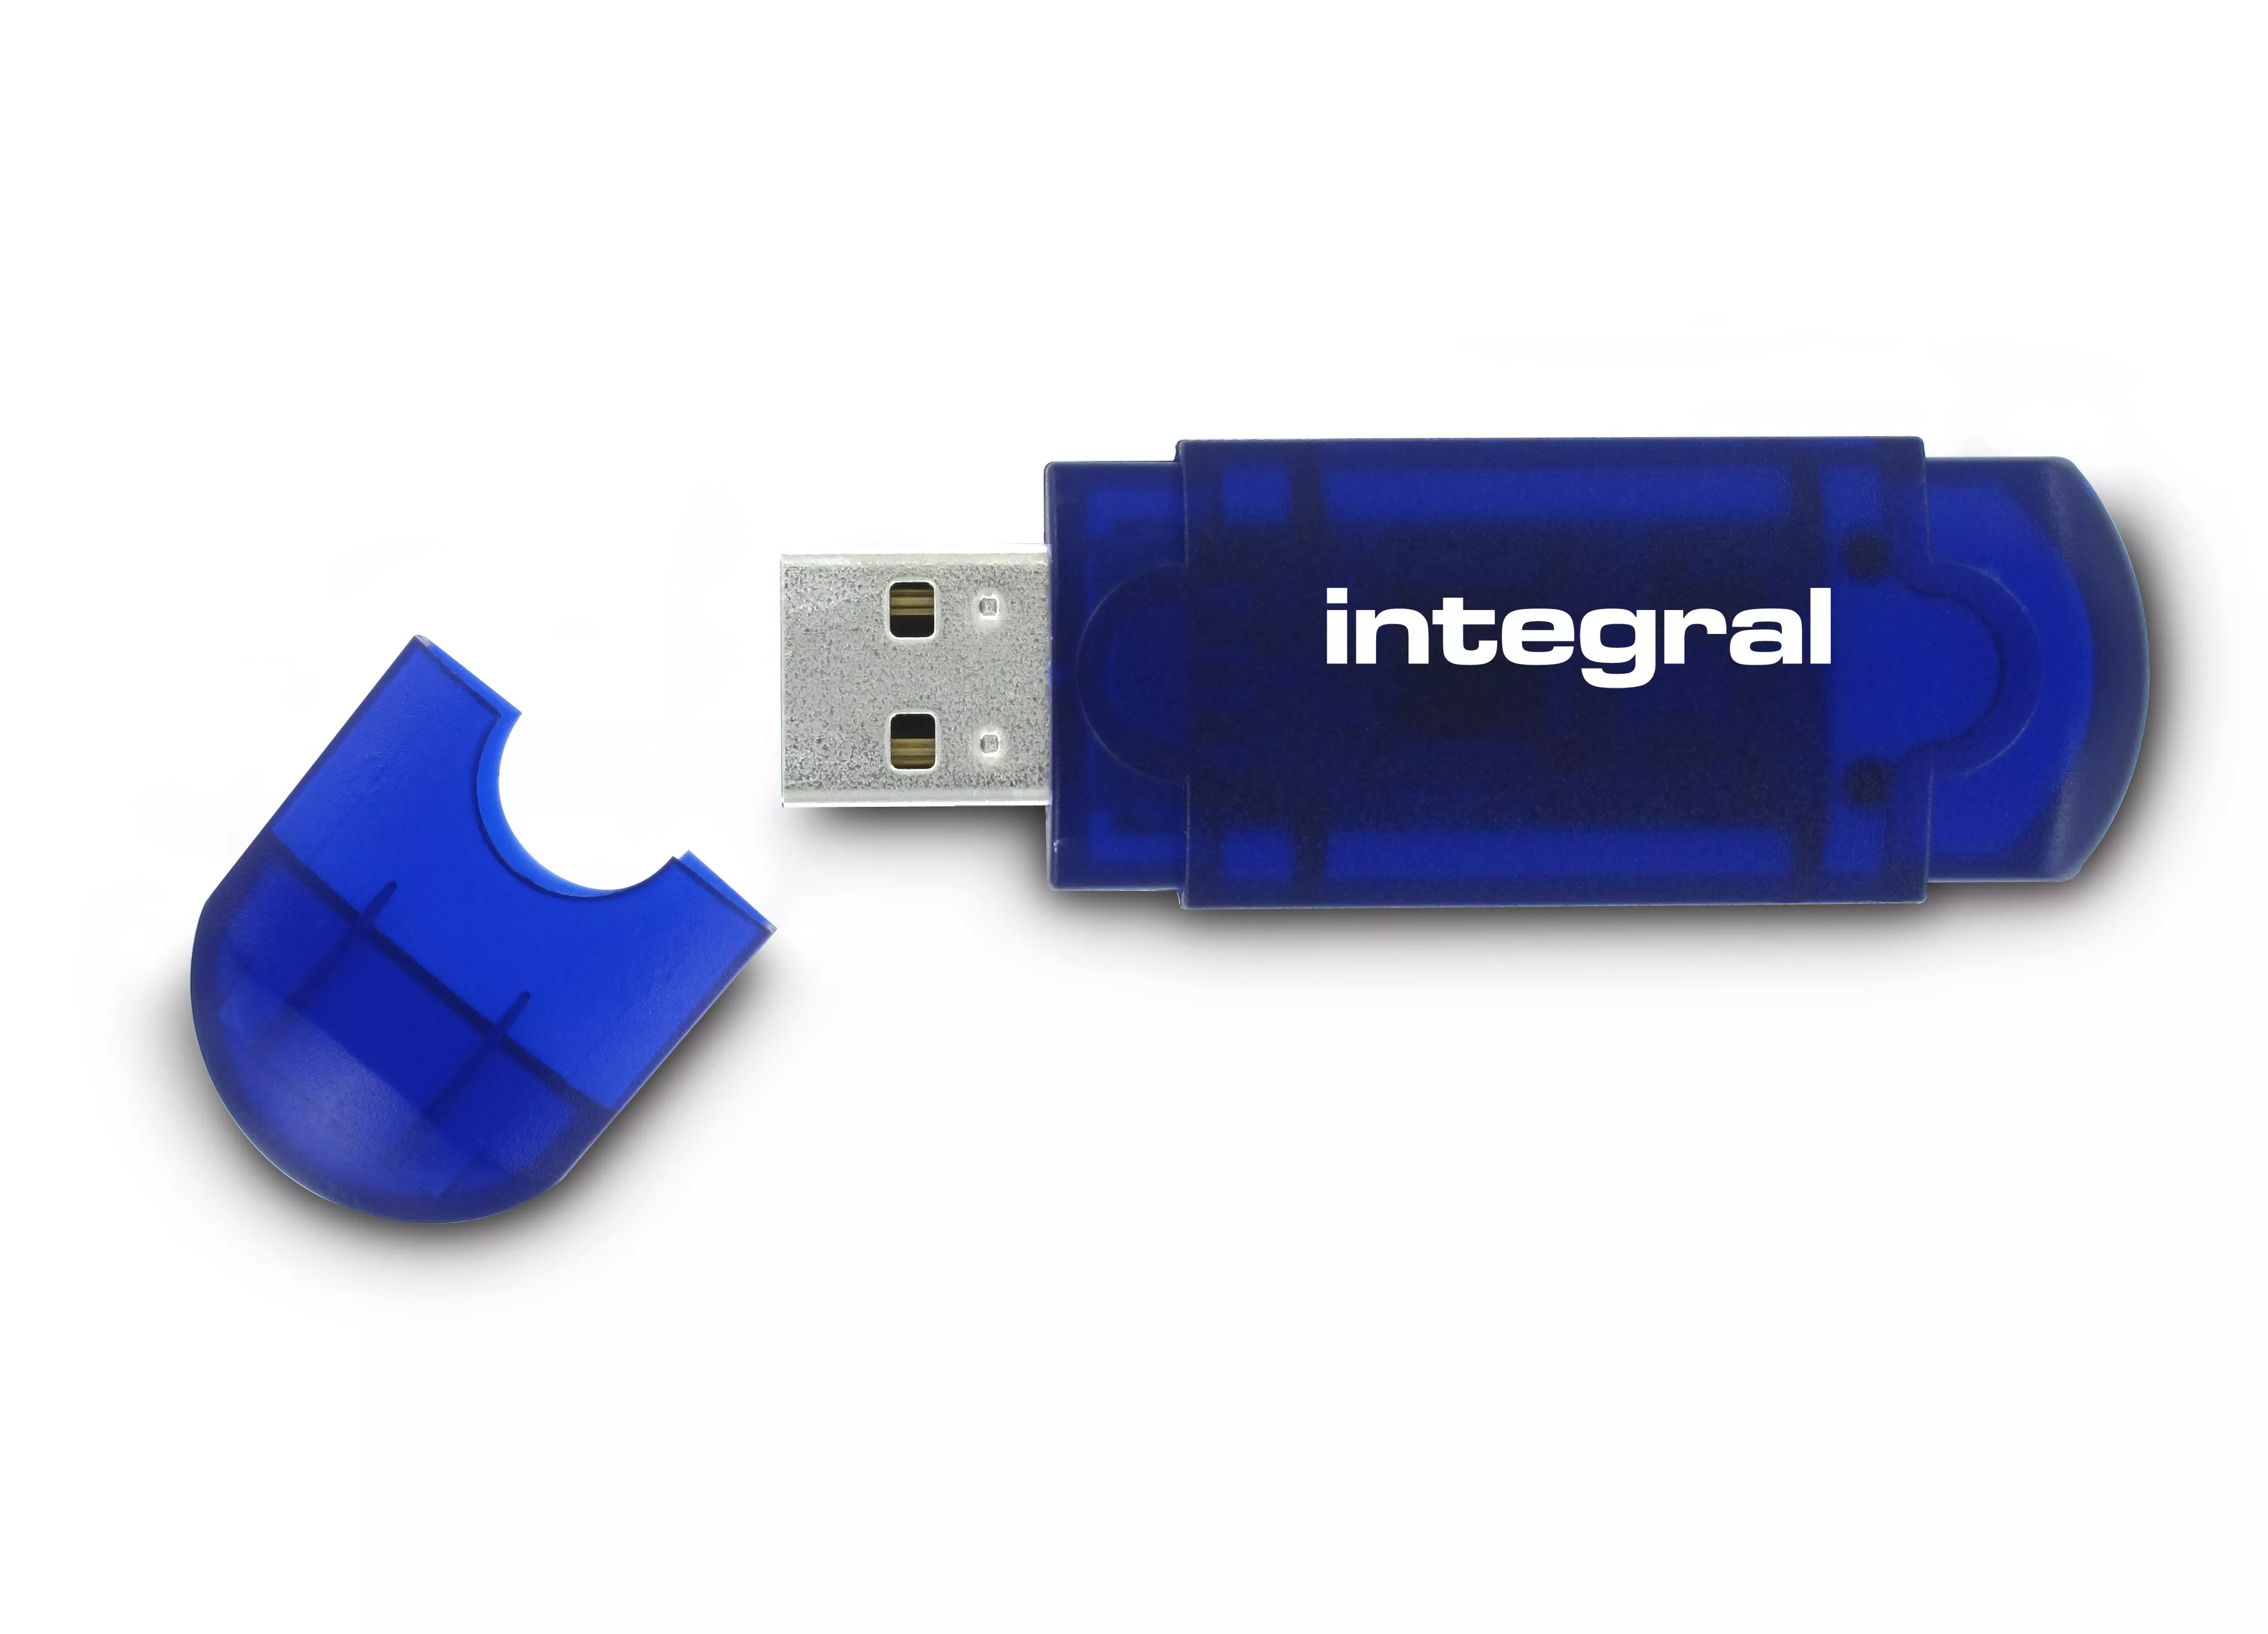 Achat Integral 32GB USB2.0 DRIVE EVO BLUE INTEGRAL au meilleur prix